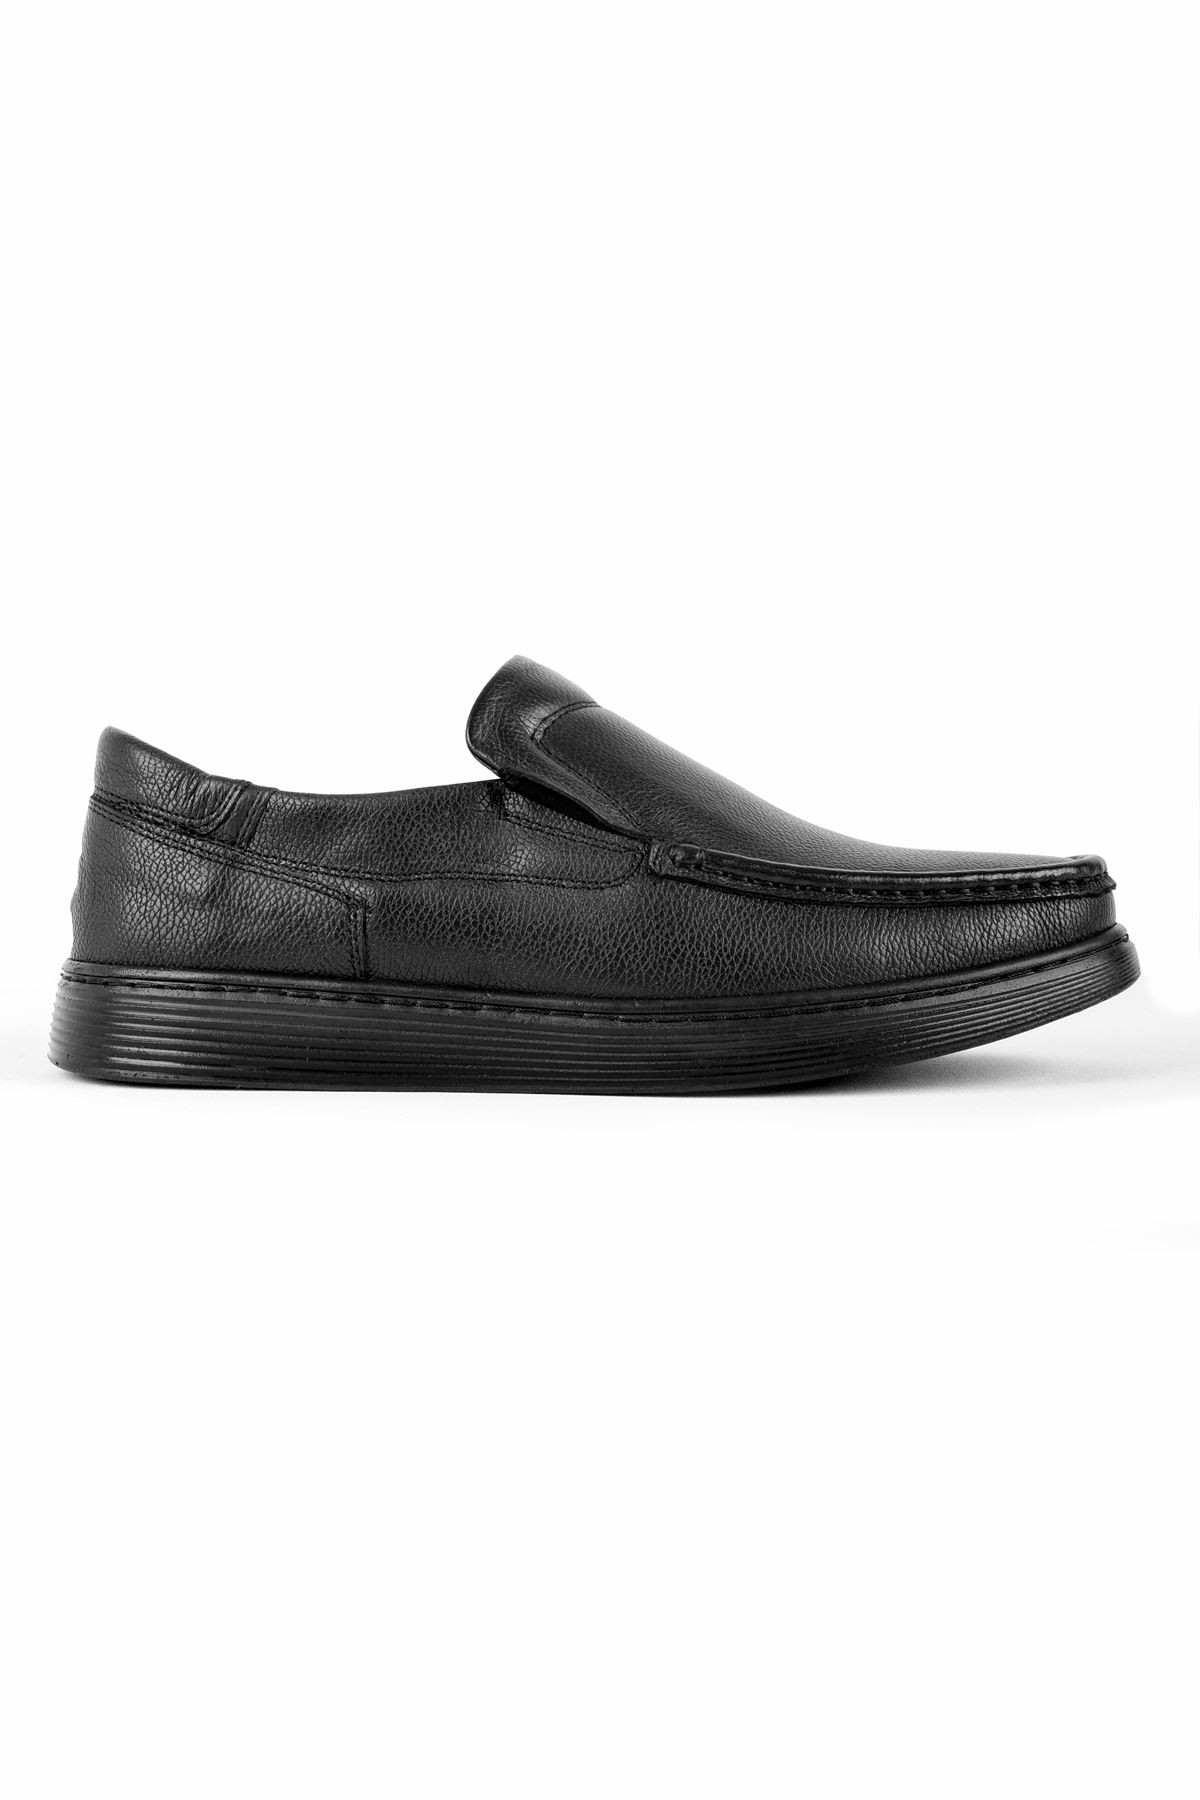 Ferguson Komfort Erkek Hakiki Deri Ayakkabı - Siyah